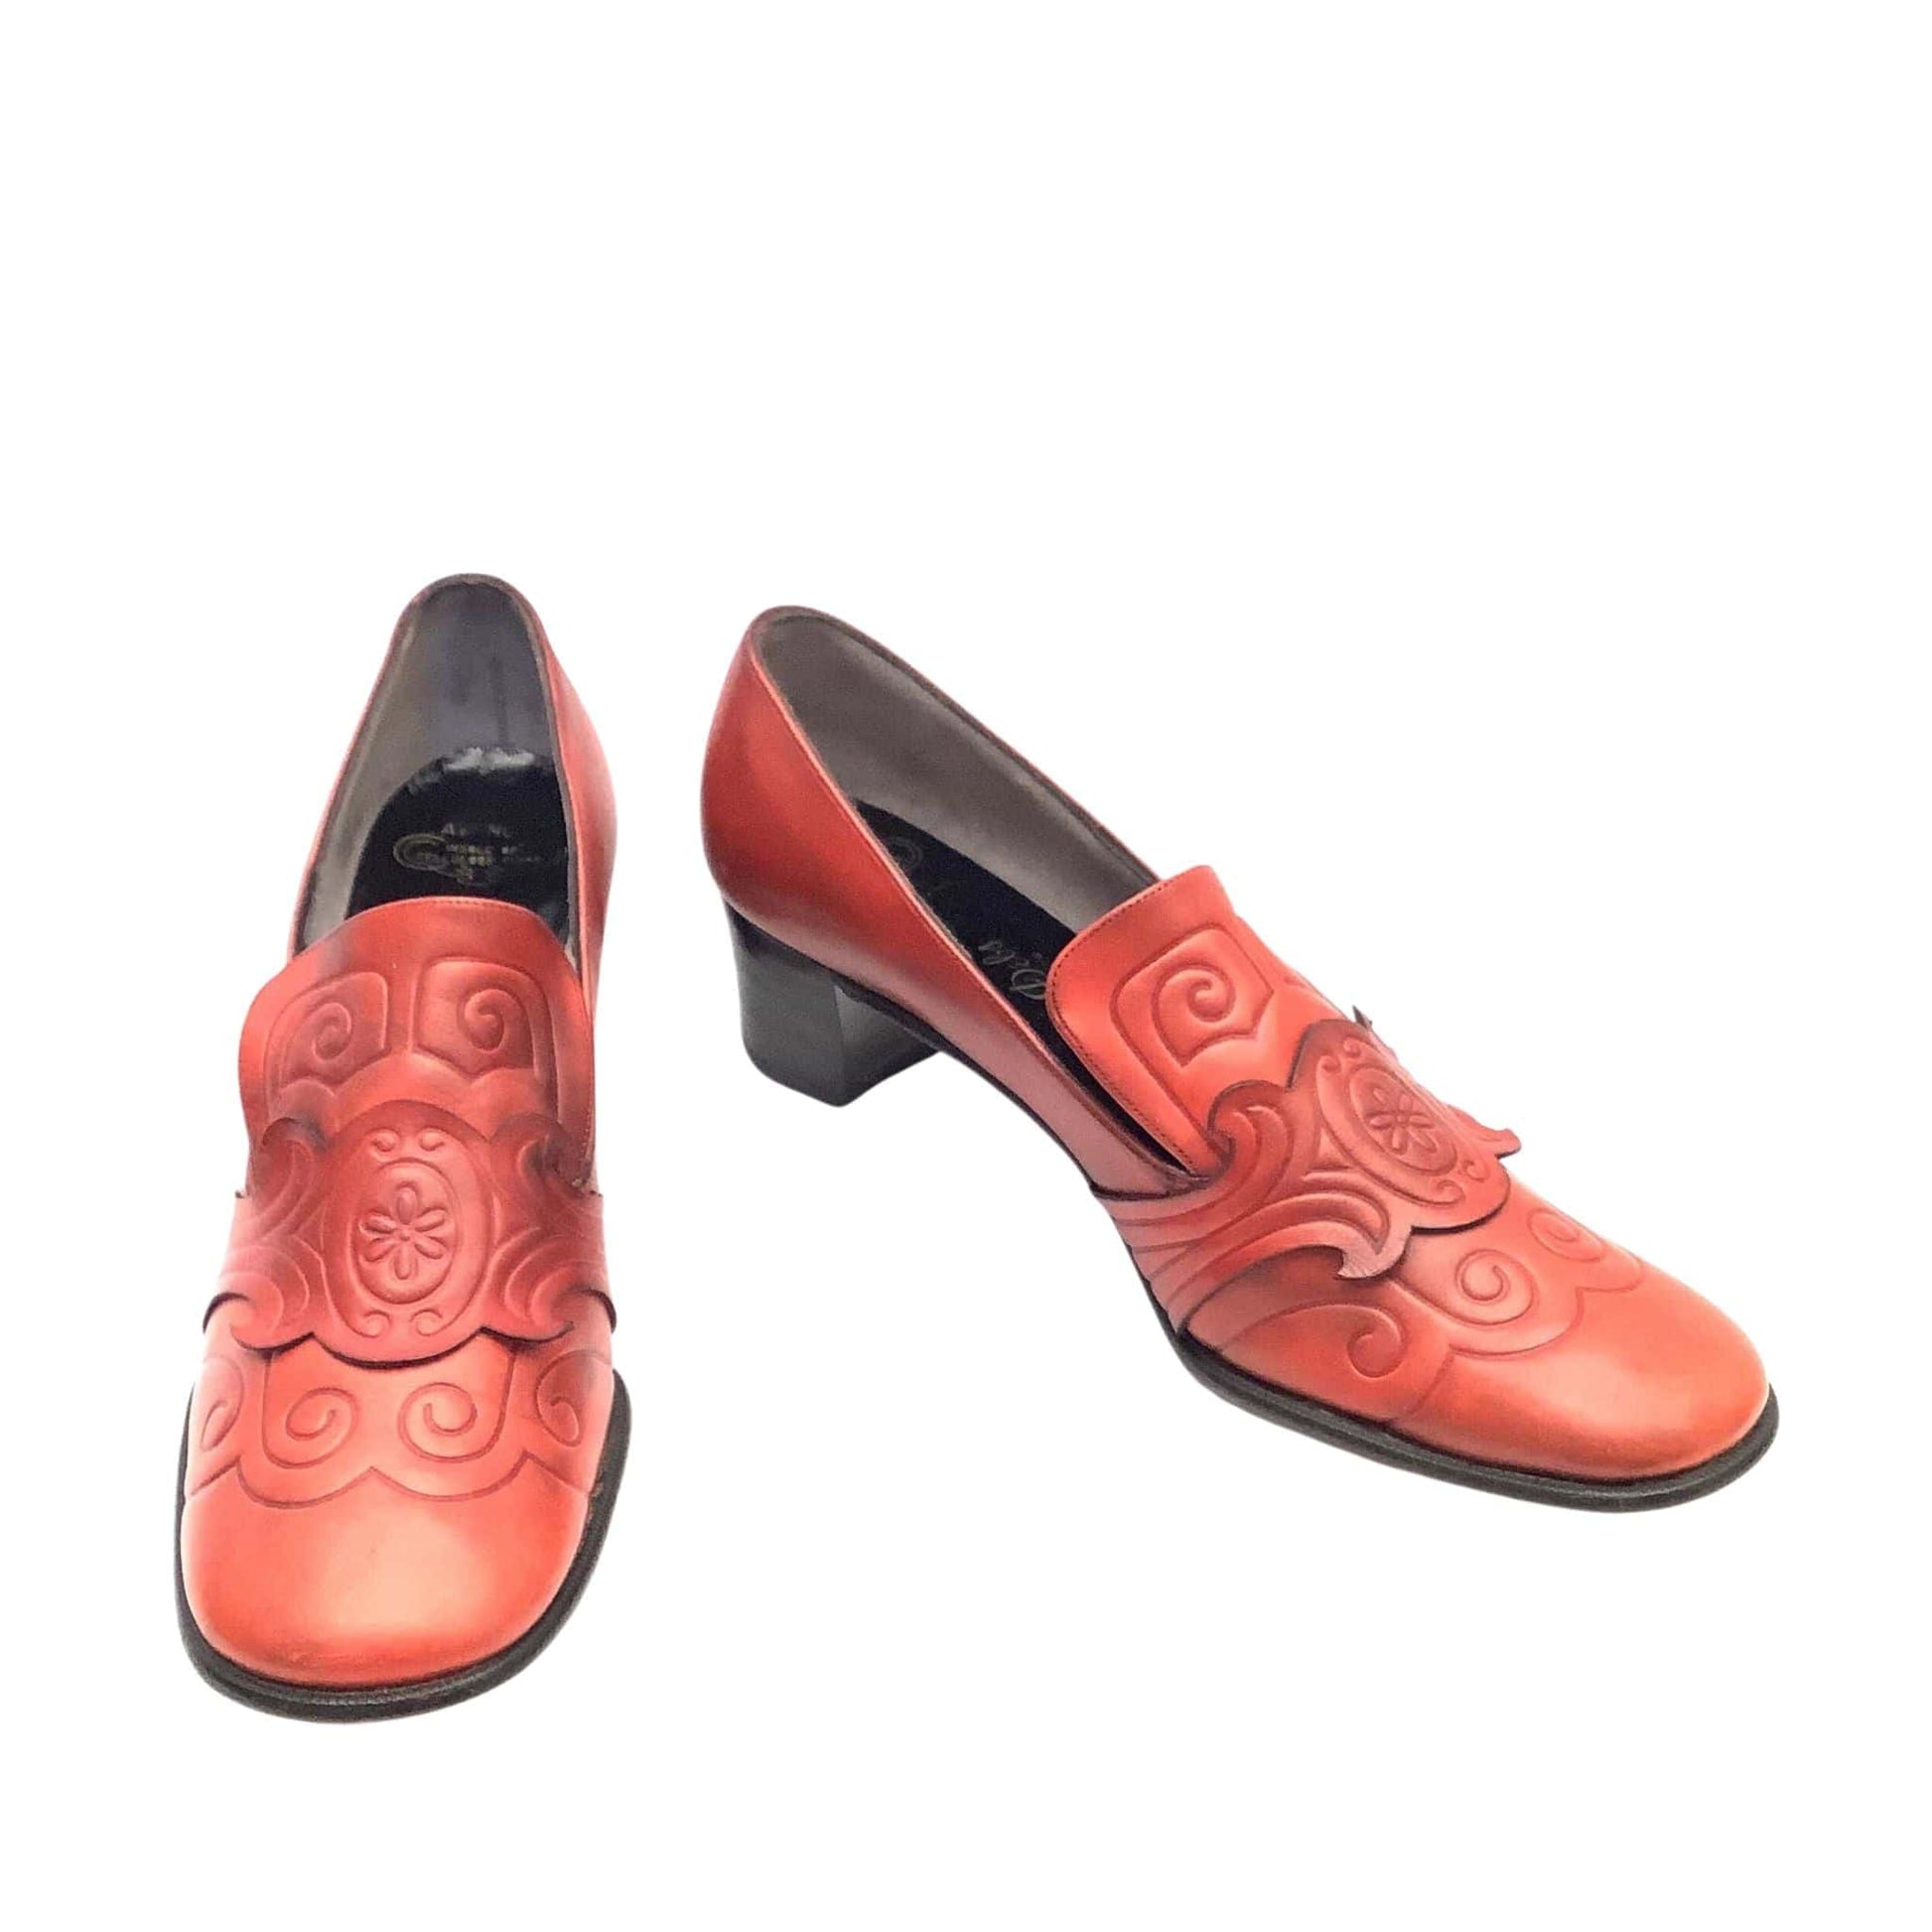 Vintage Palter Deliso Heels 8.5 / Orange / Vintage 1960s